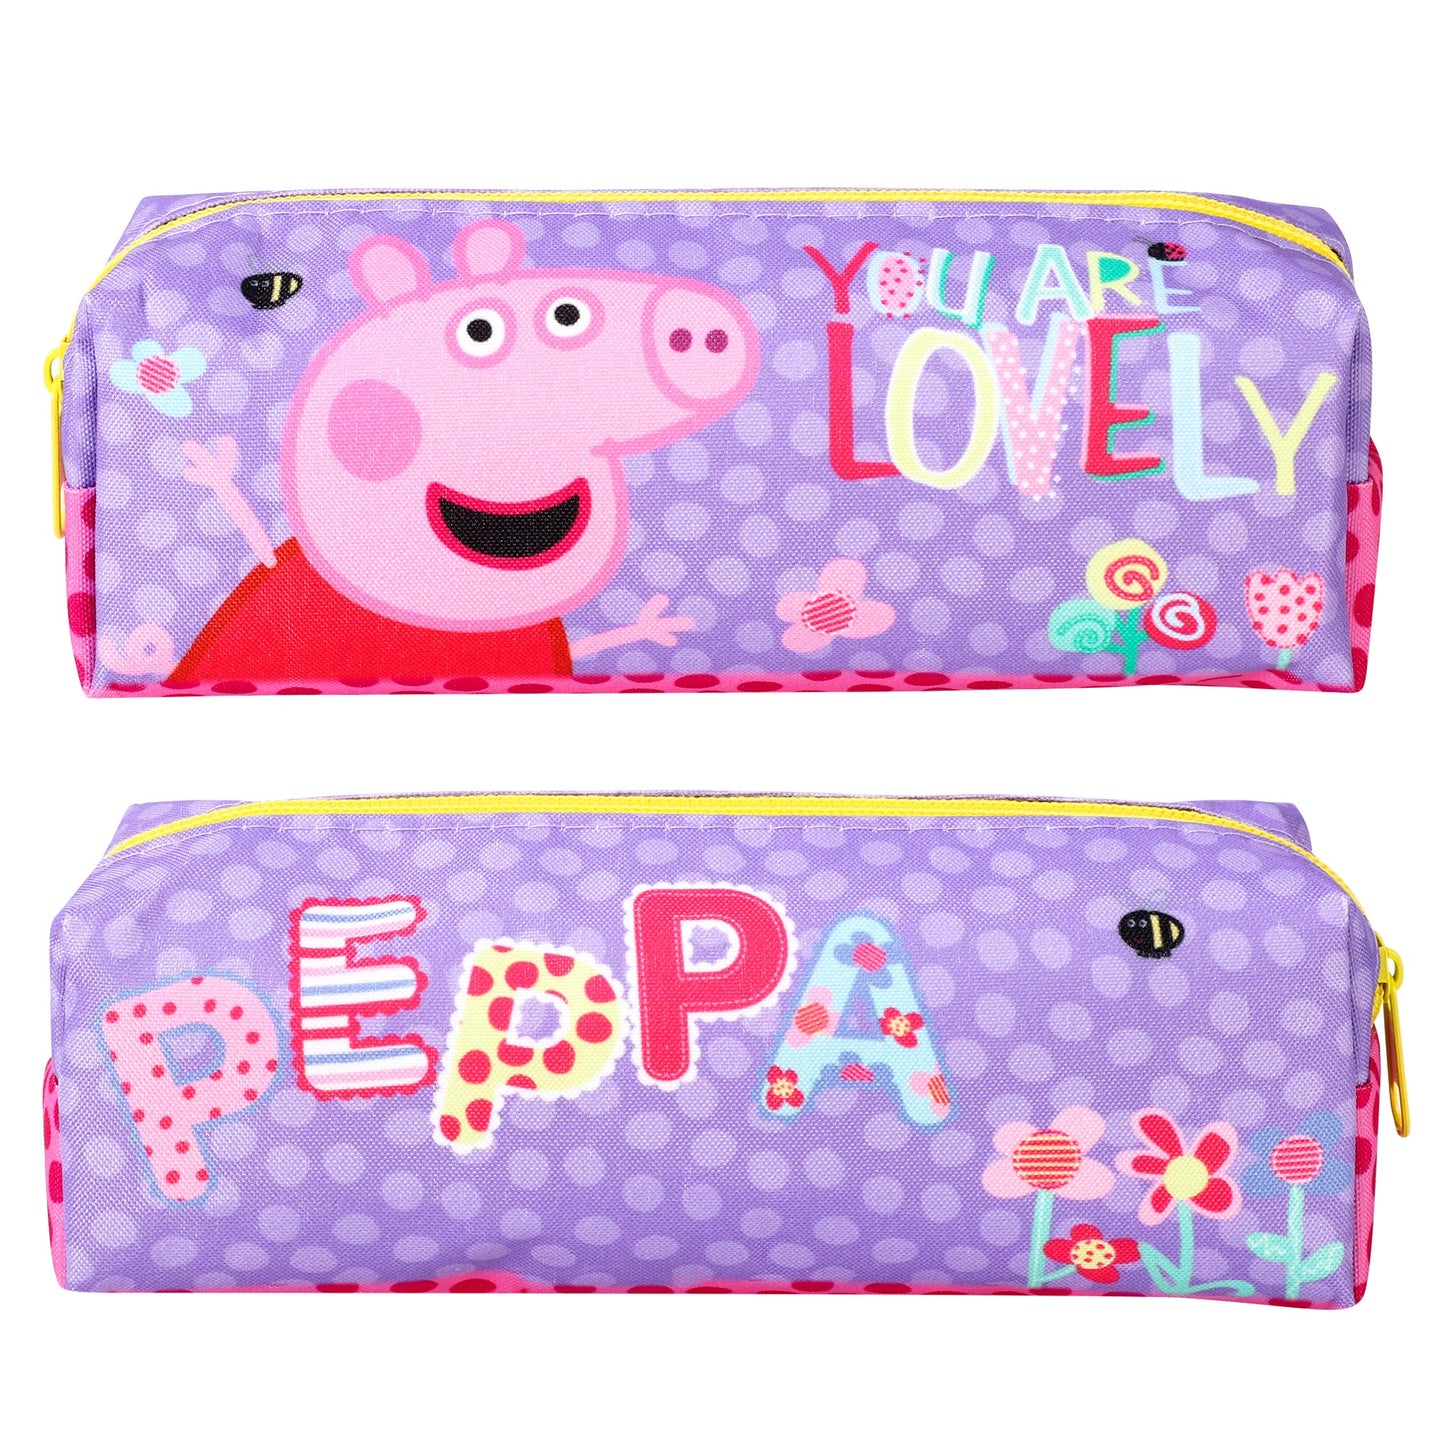 Peppa Pig Pencil Case